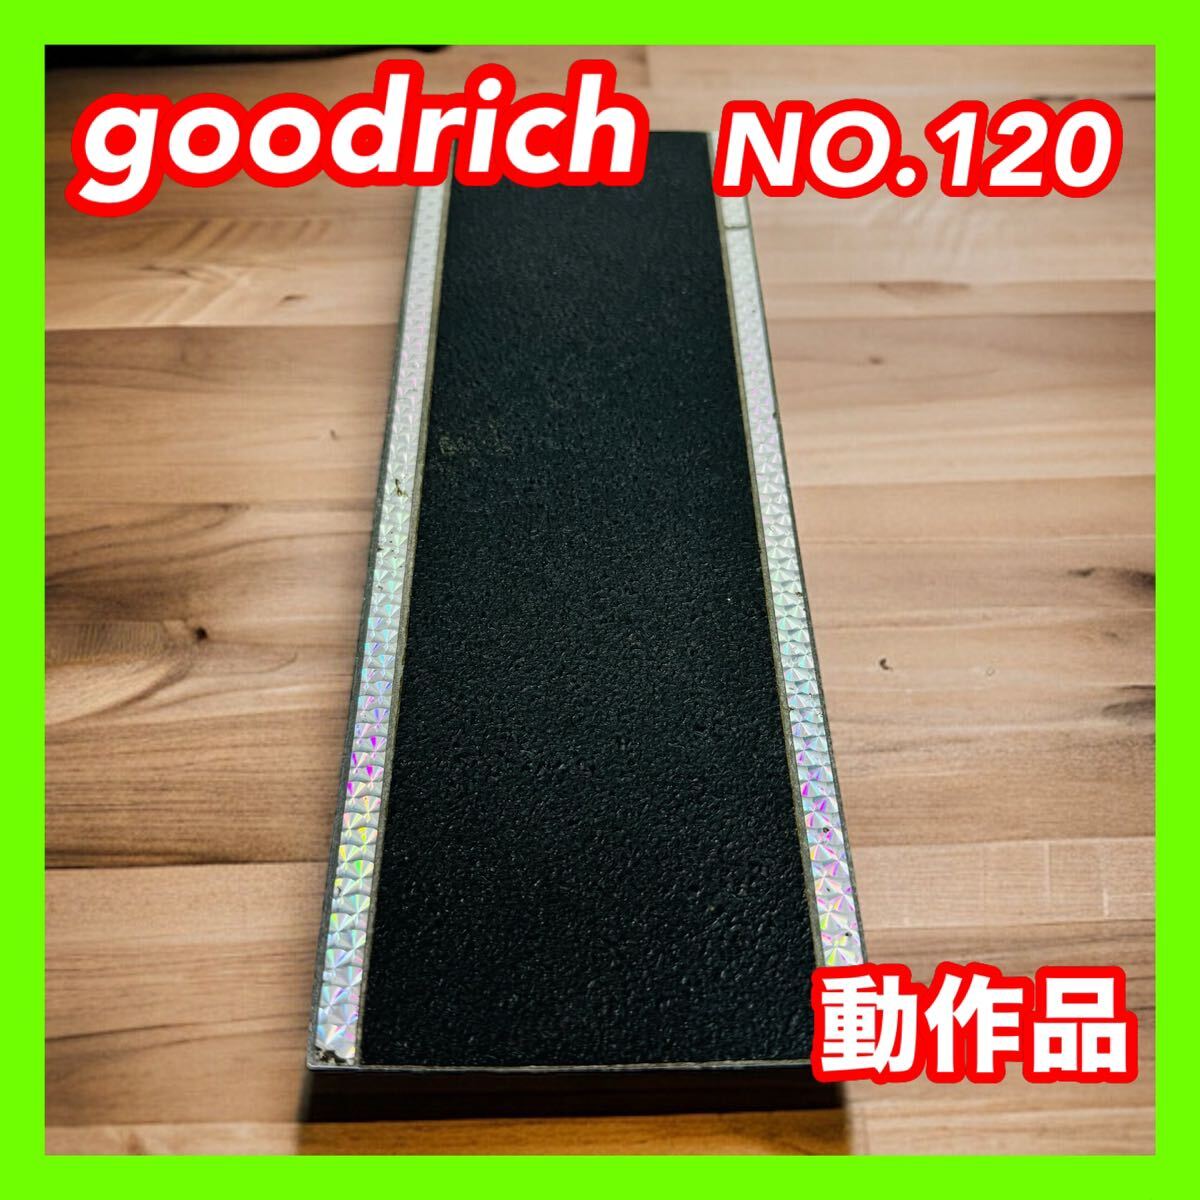 goodrich volume pedal MODEL NO.120